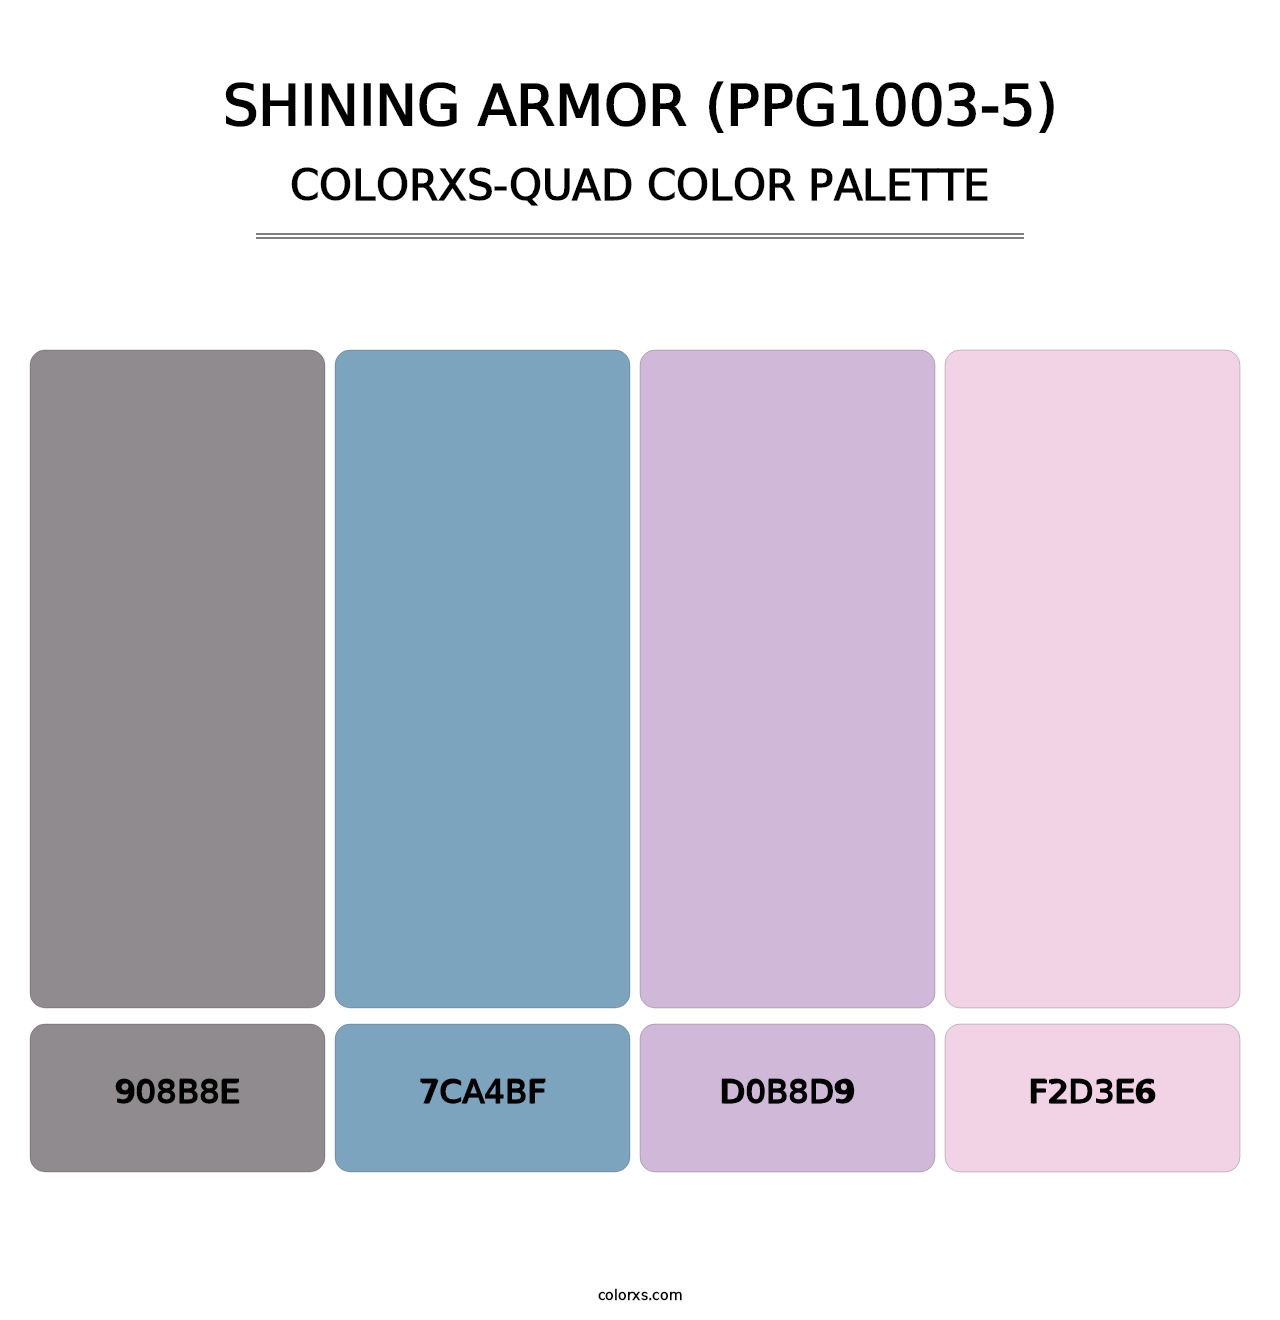 Shining Armor (PPG1003-5) - Colorxs Quad Palette